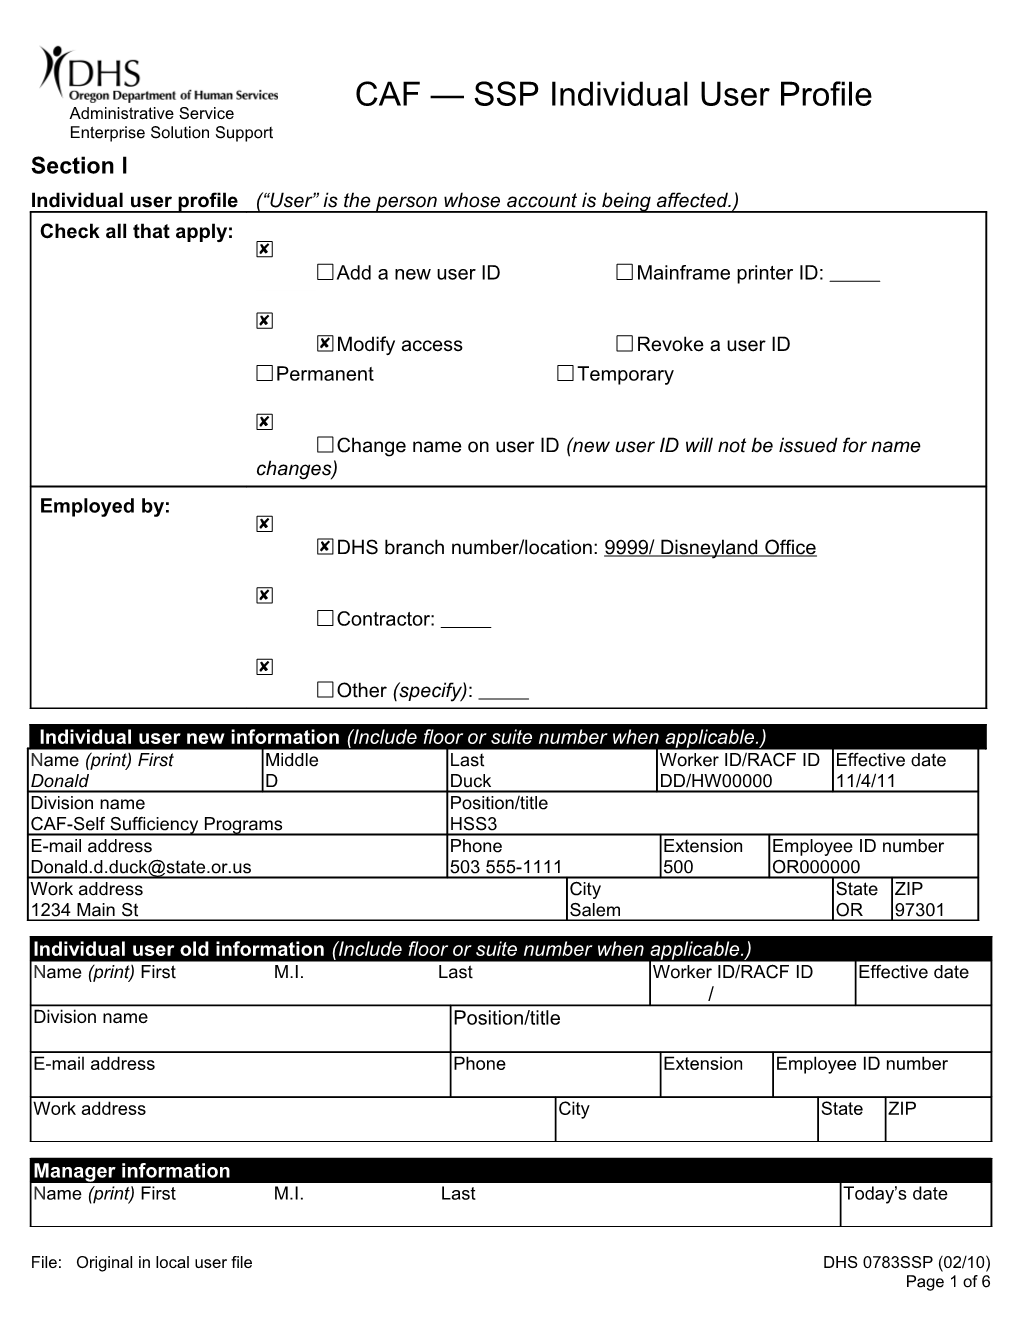 CAF - SSP Individual User Profile 02/10 DHS 783SSP